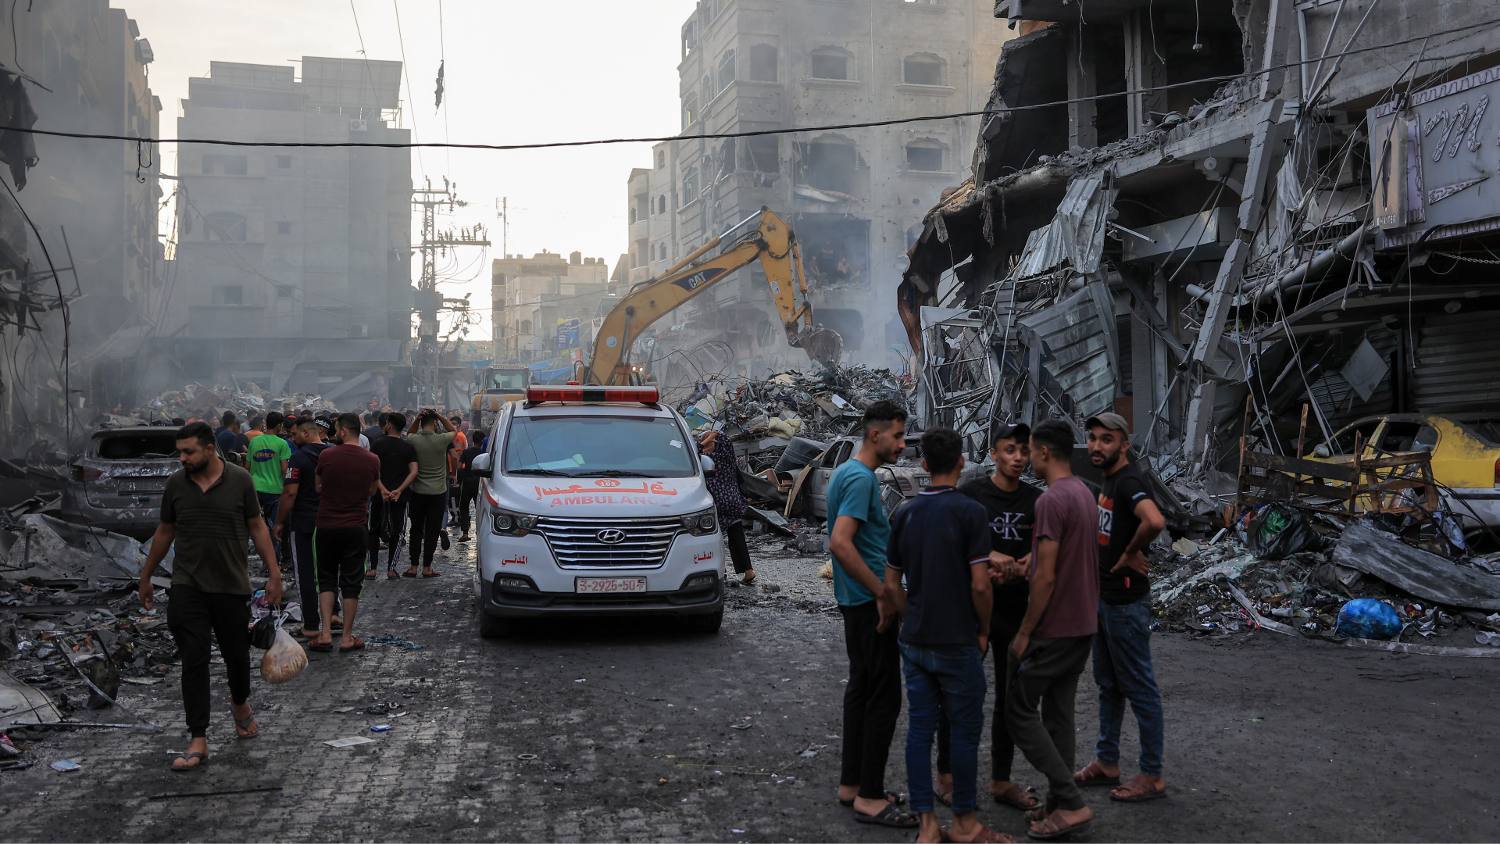 An ambulance drives through the wreckage of an Israeli air strike in Gaza.